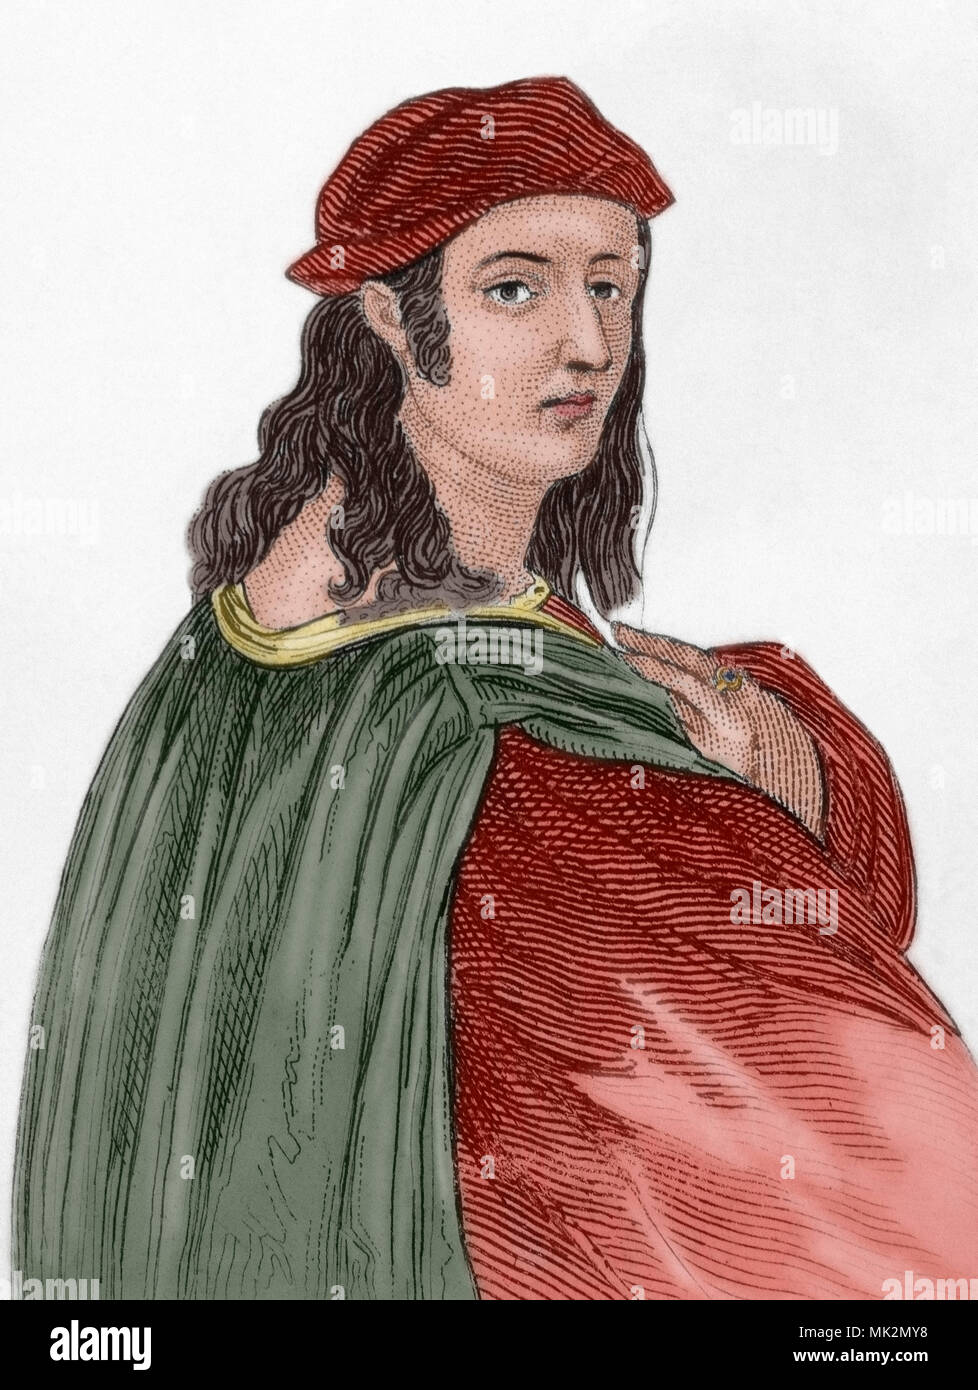 Raphaël, Raffaello Sanzio da Urbino (Urbino, 1483-Rome, 1520). L'artiste italien de la Renaissance. La gravure. Plus tard la couleur. Banque D'Images